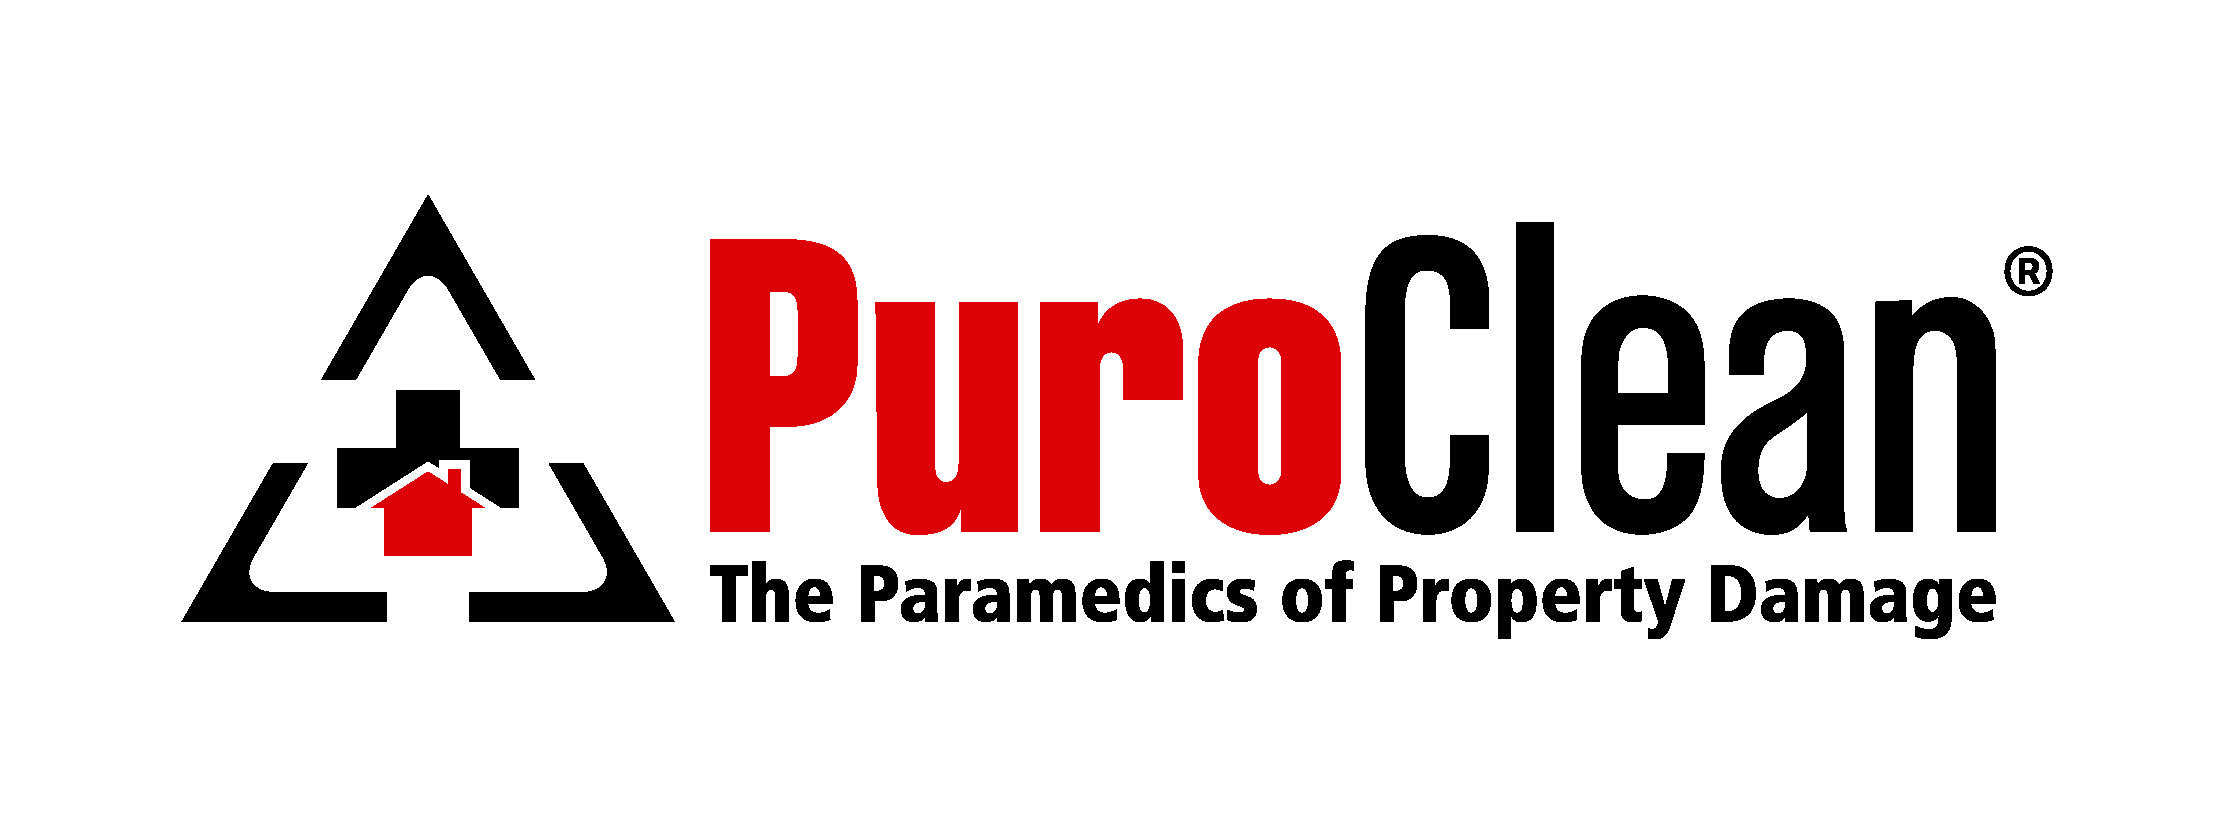 PuroClean Awards FirstEver Free Franchise to Military Veteran Through